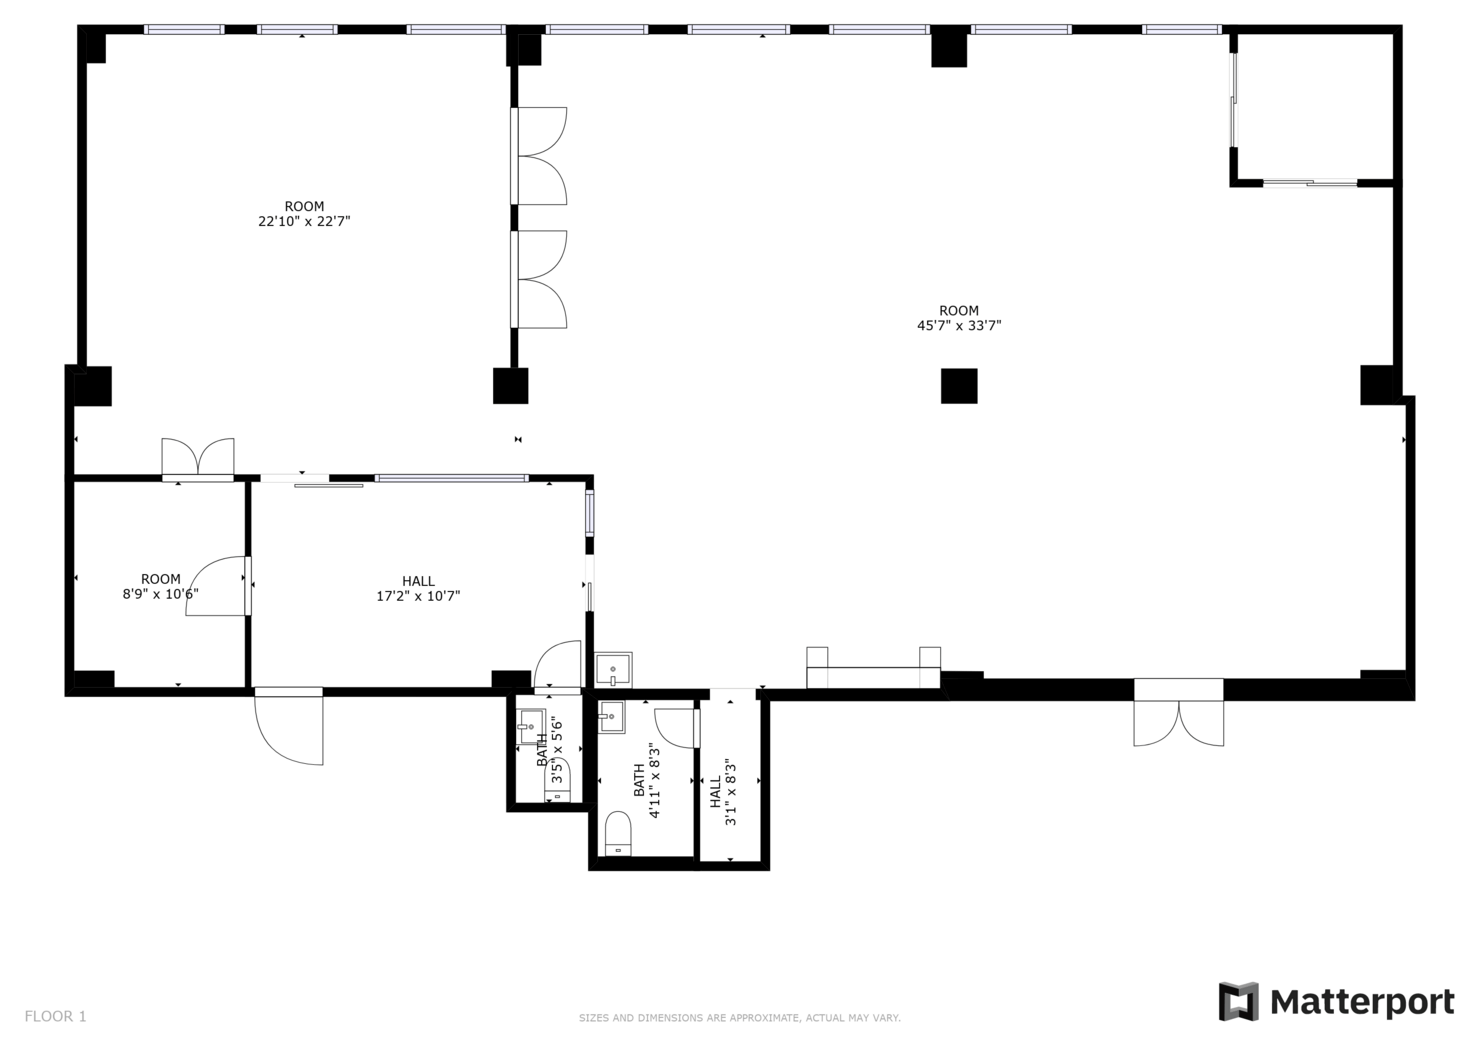 247 West 35th Street Office Space - Floorplan